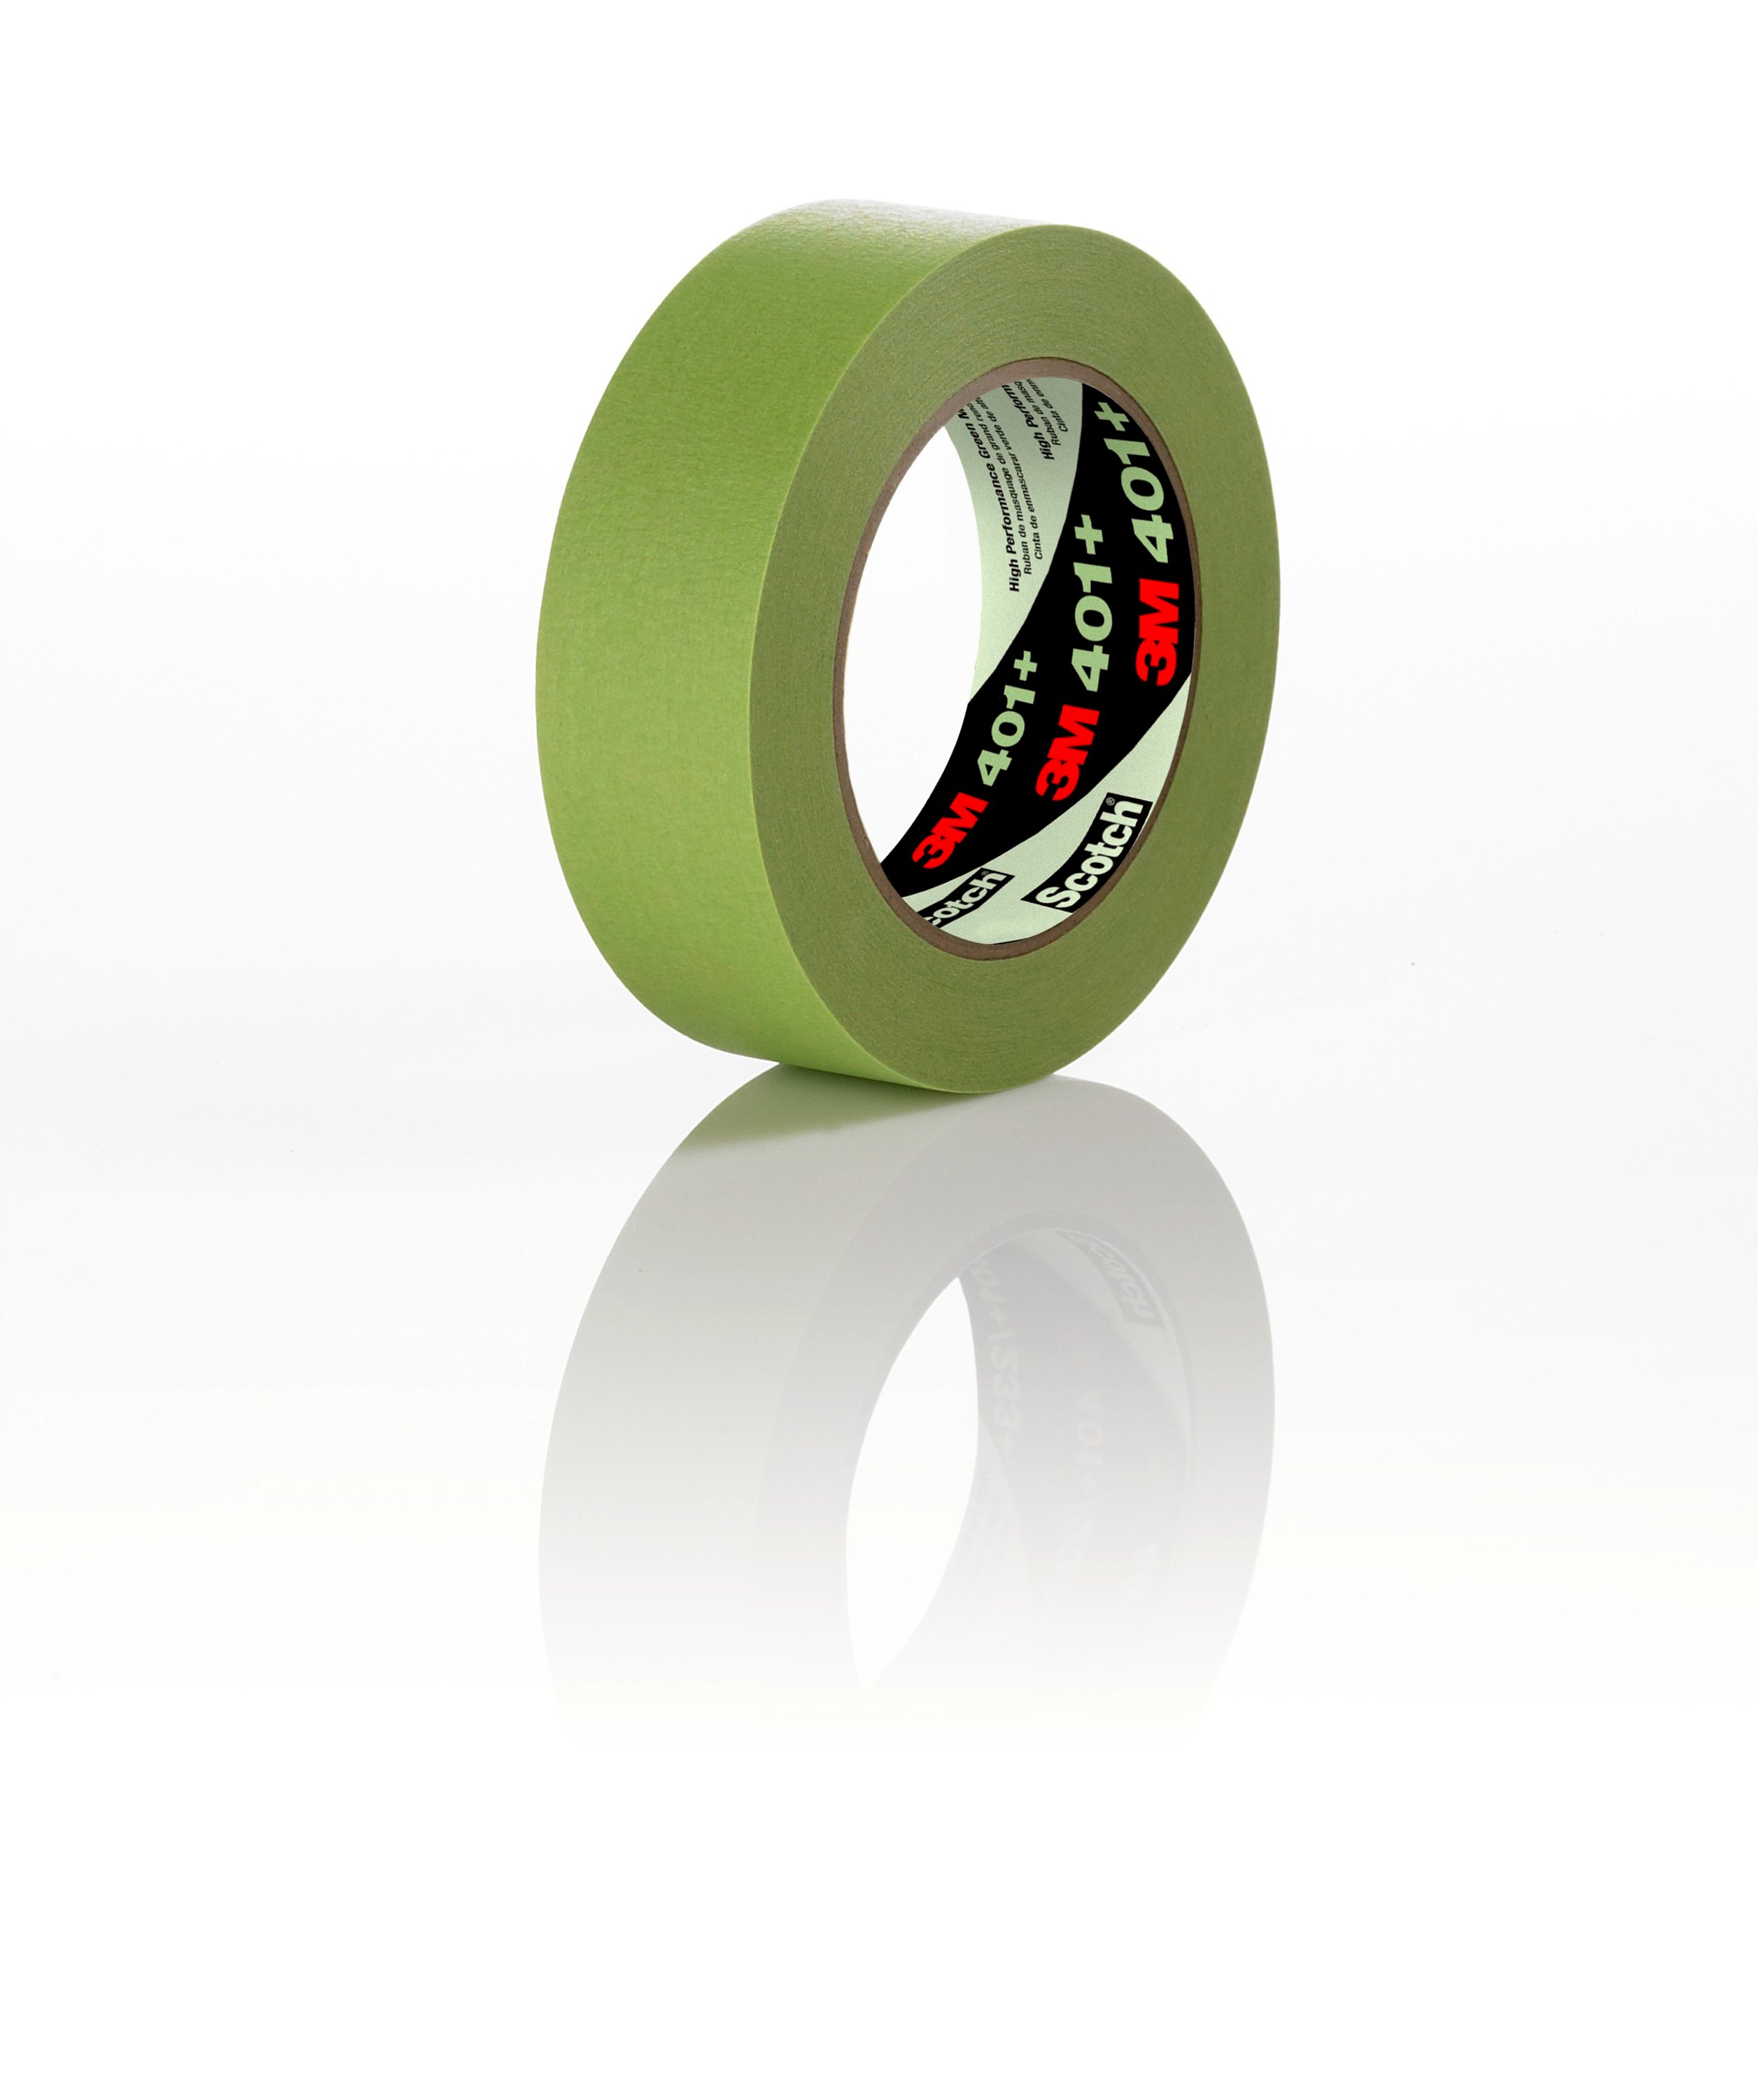 3M High Performance Green Masking Tape 401+, 72 mm x 55 M, 6.7 Mil